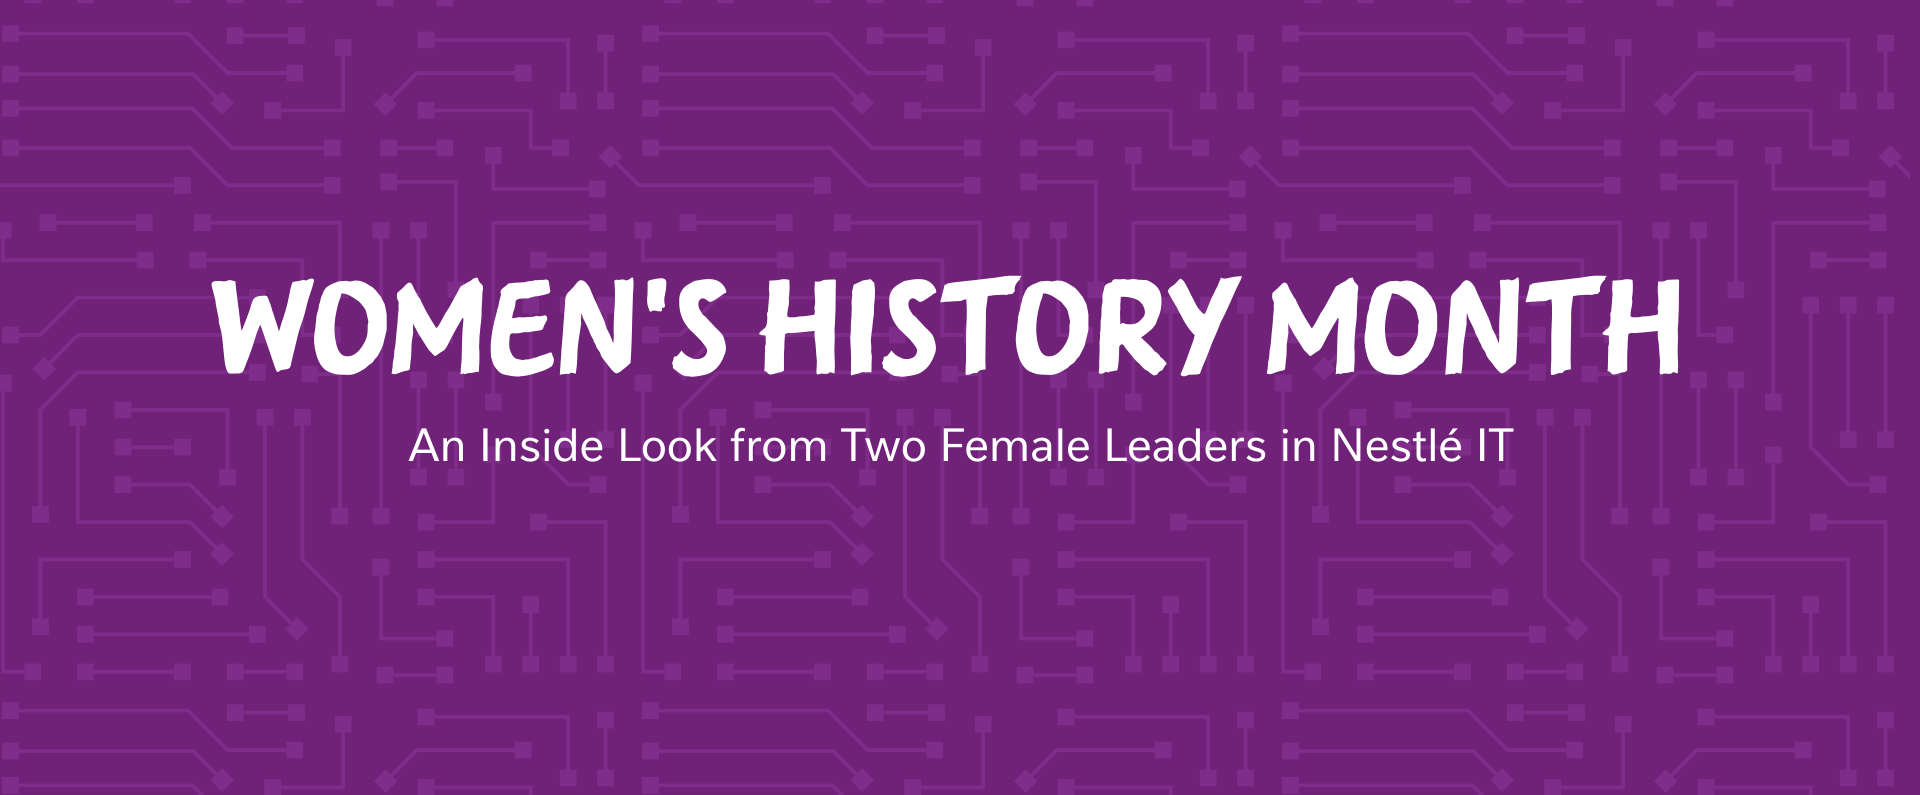 Women's History Month, an inside look